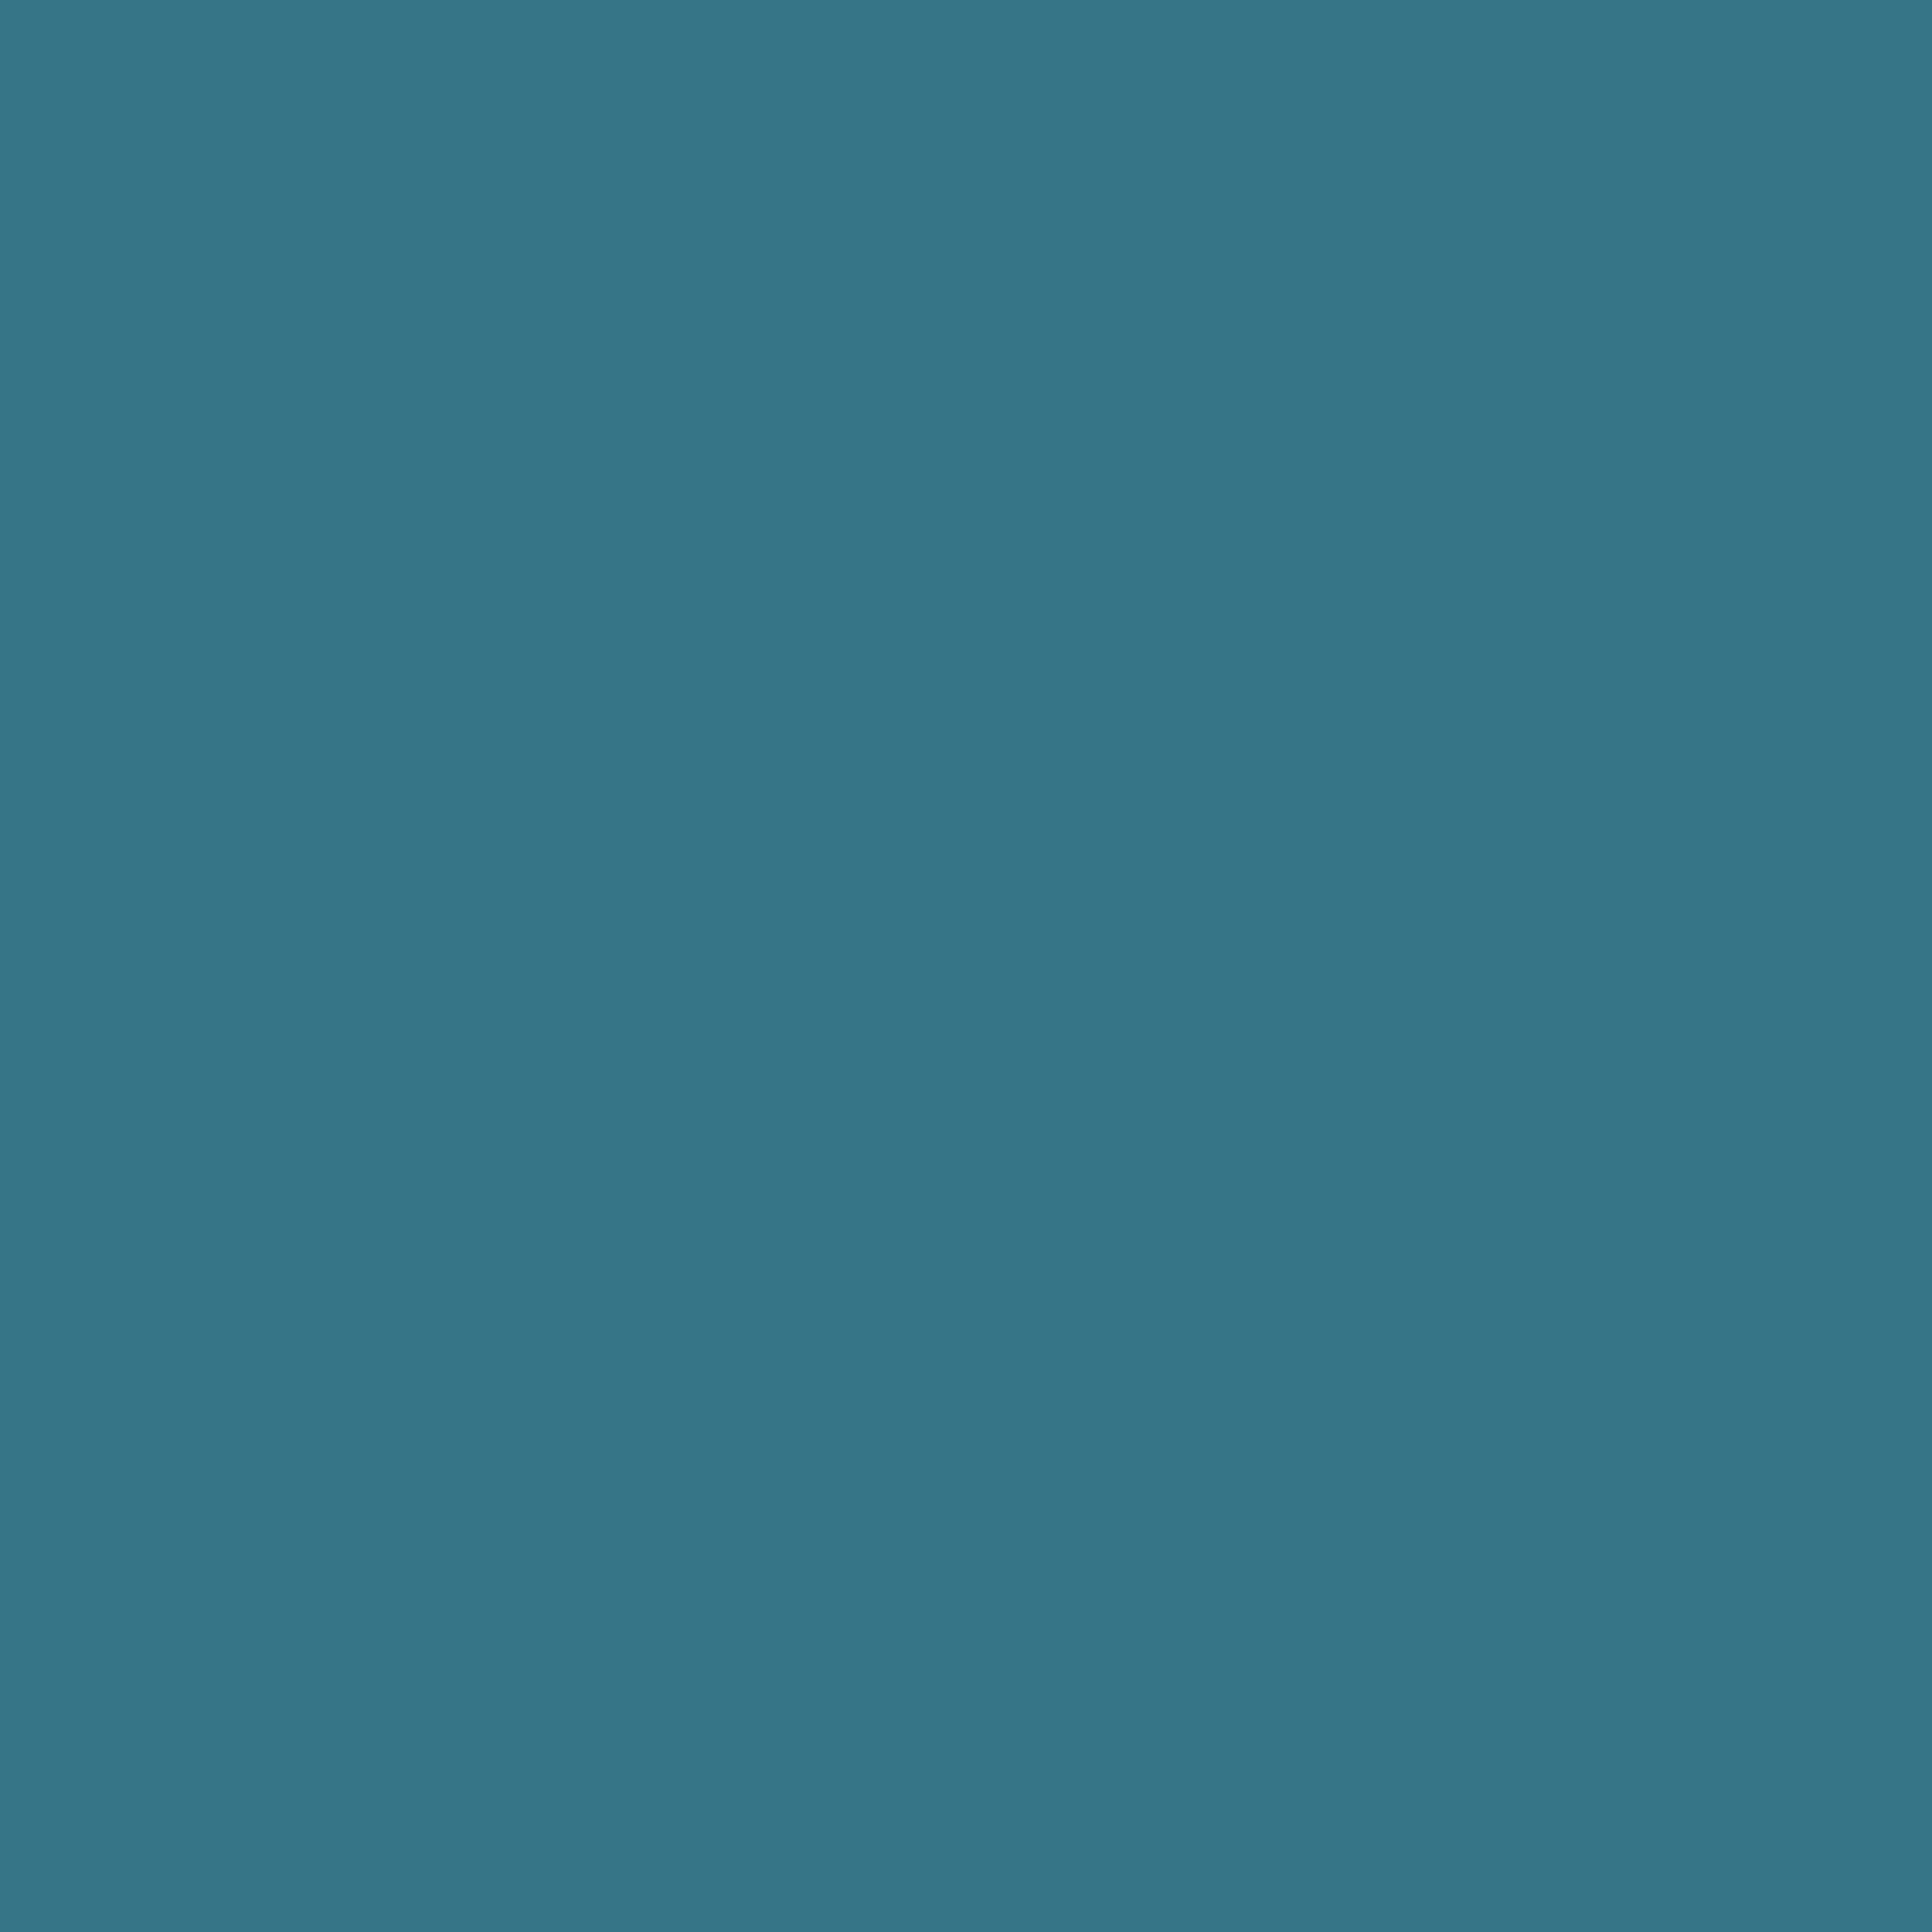 3600x3600 Teal Blue Solid Color Background